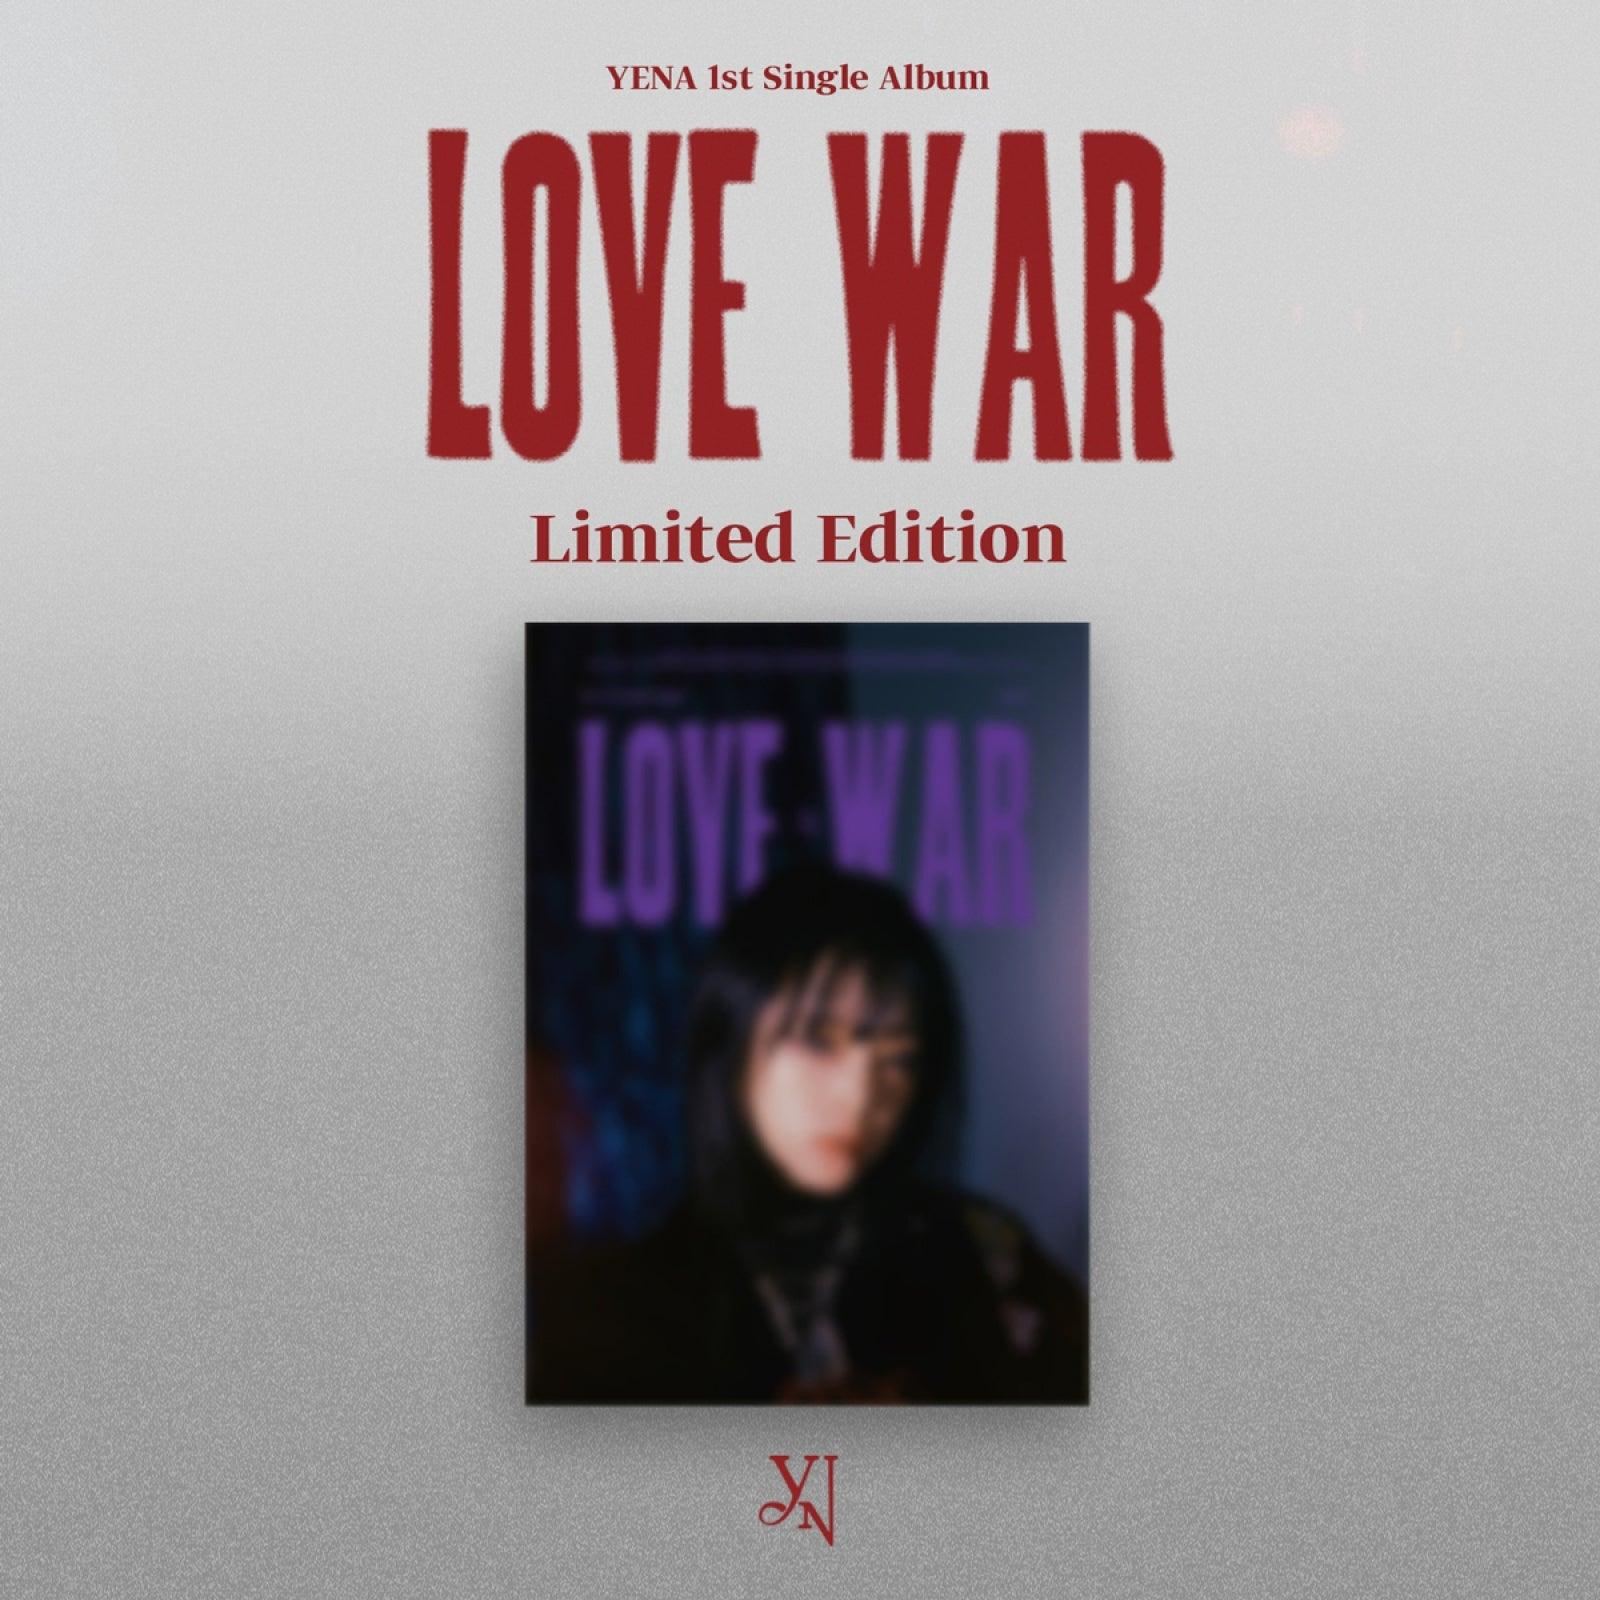 YENA Single Album Vol. 1 - Love War (Limited) - KKANG